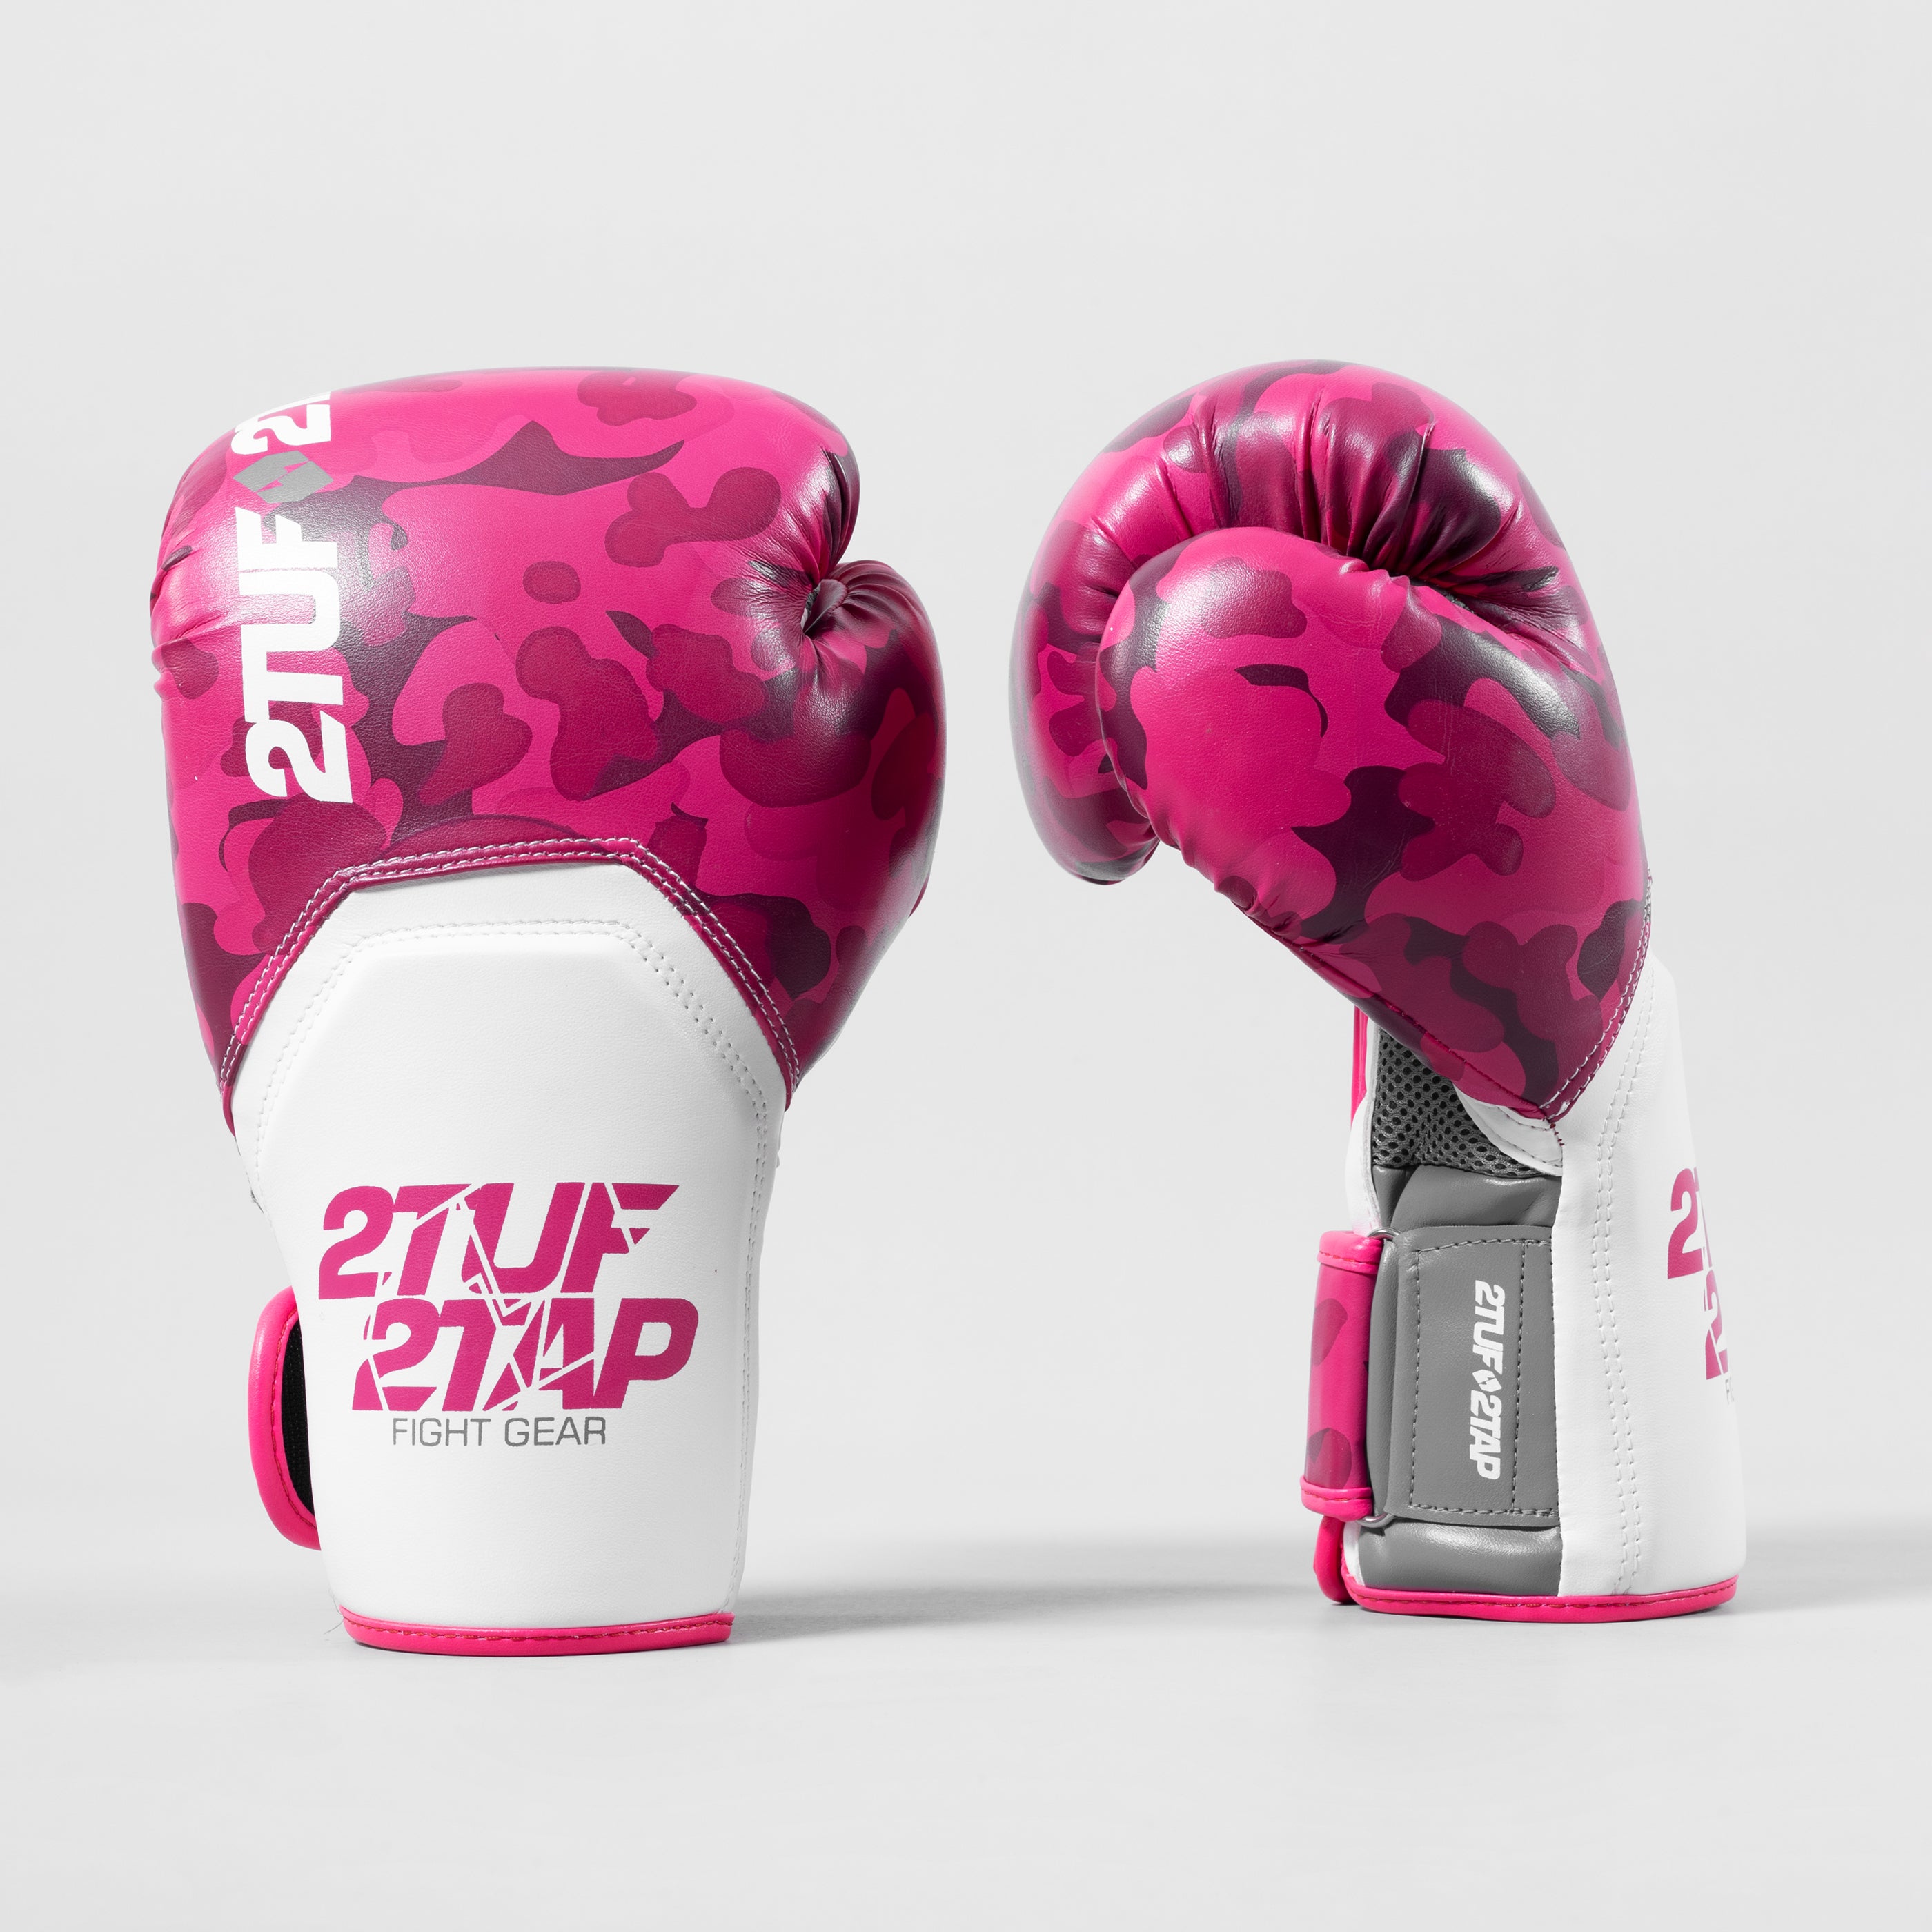 'Camo Elite' Boxing Gloves - Pink/White 2TUF2TAP